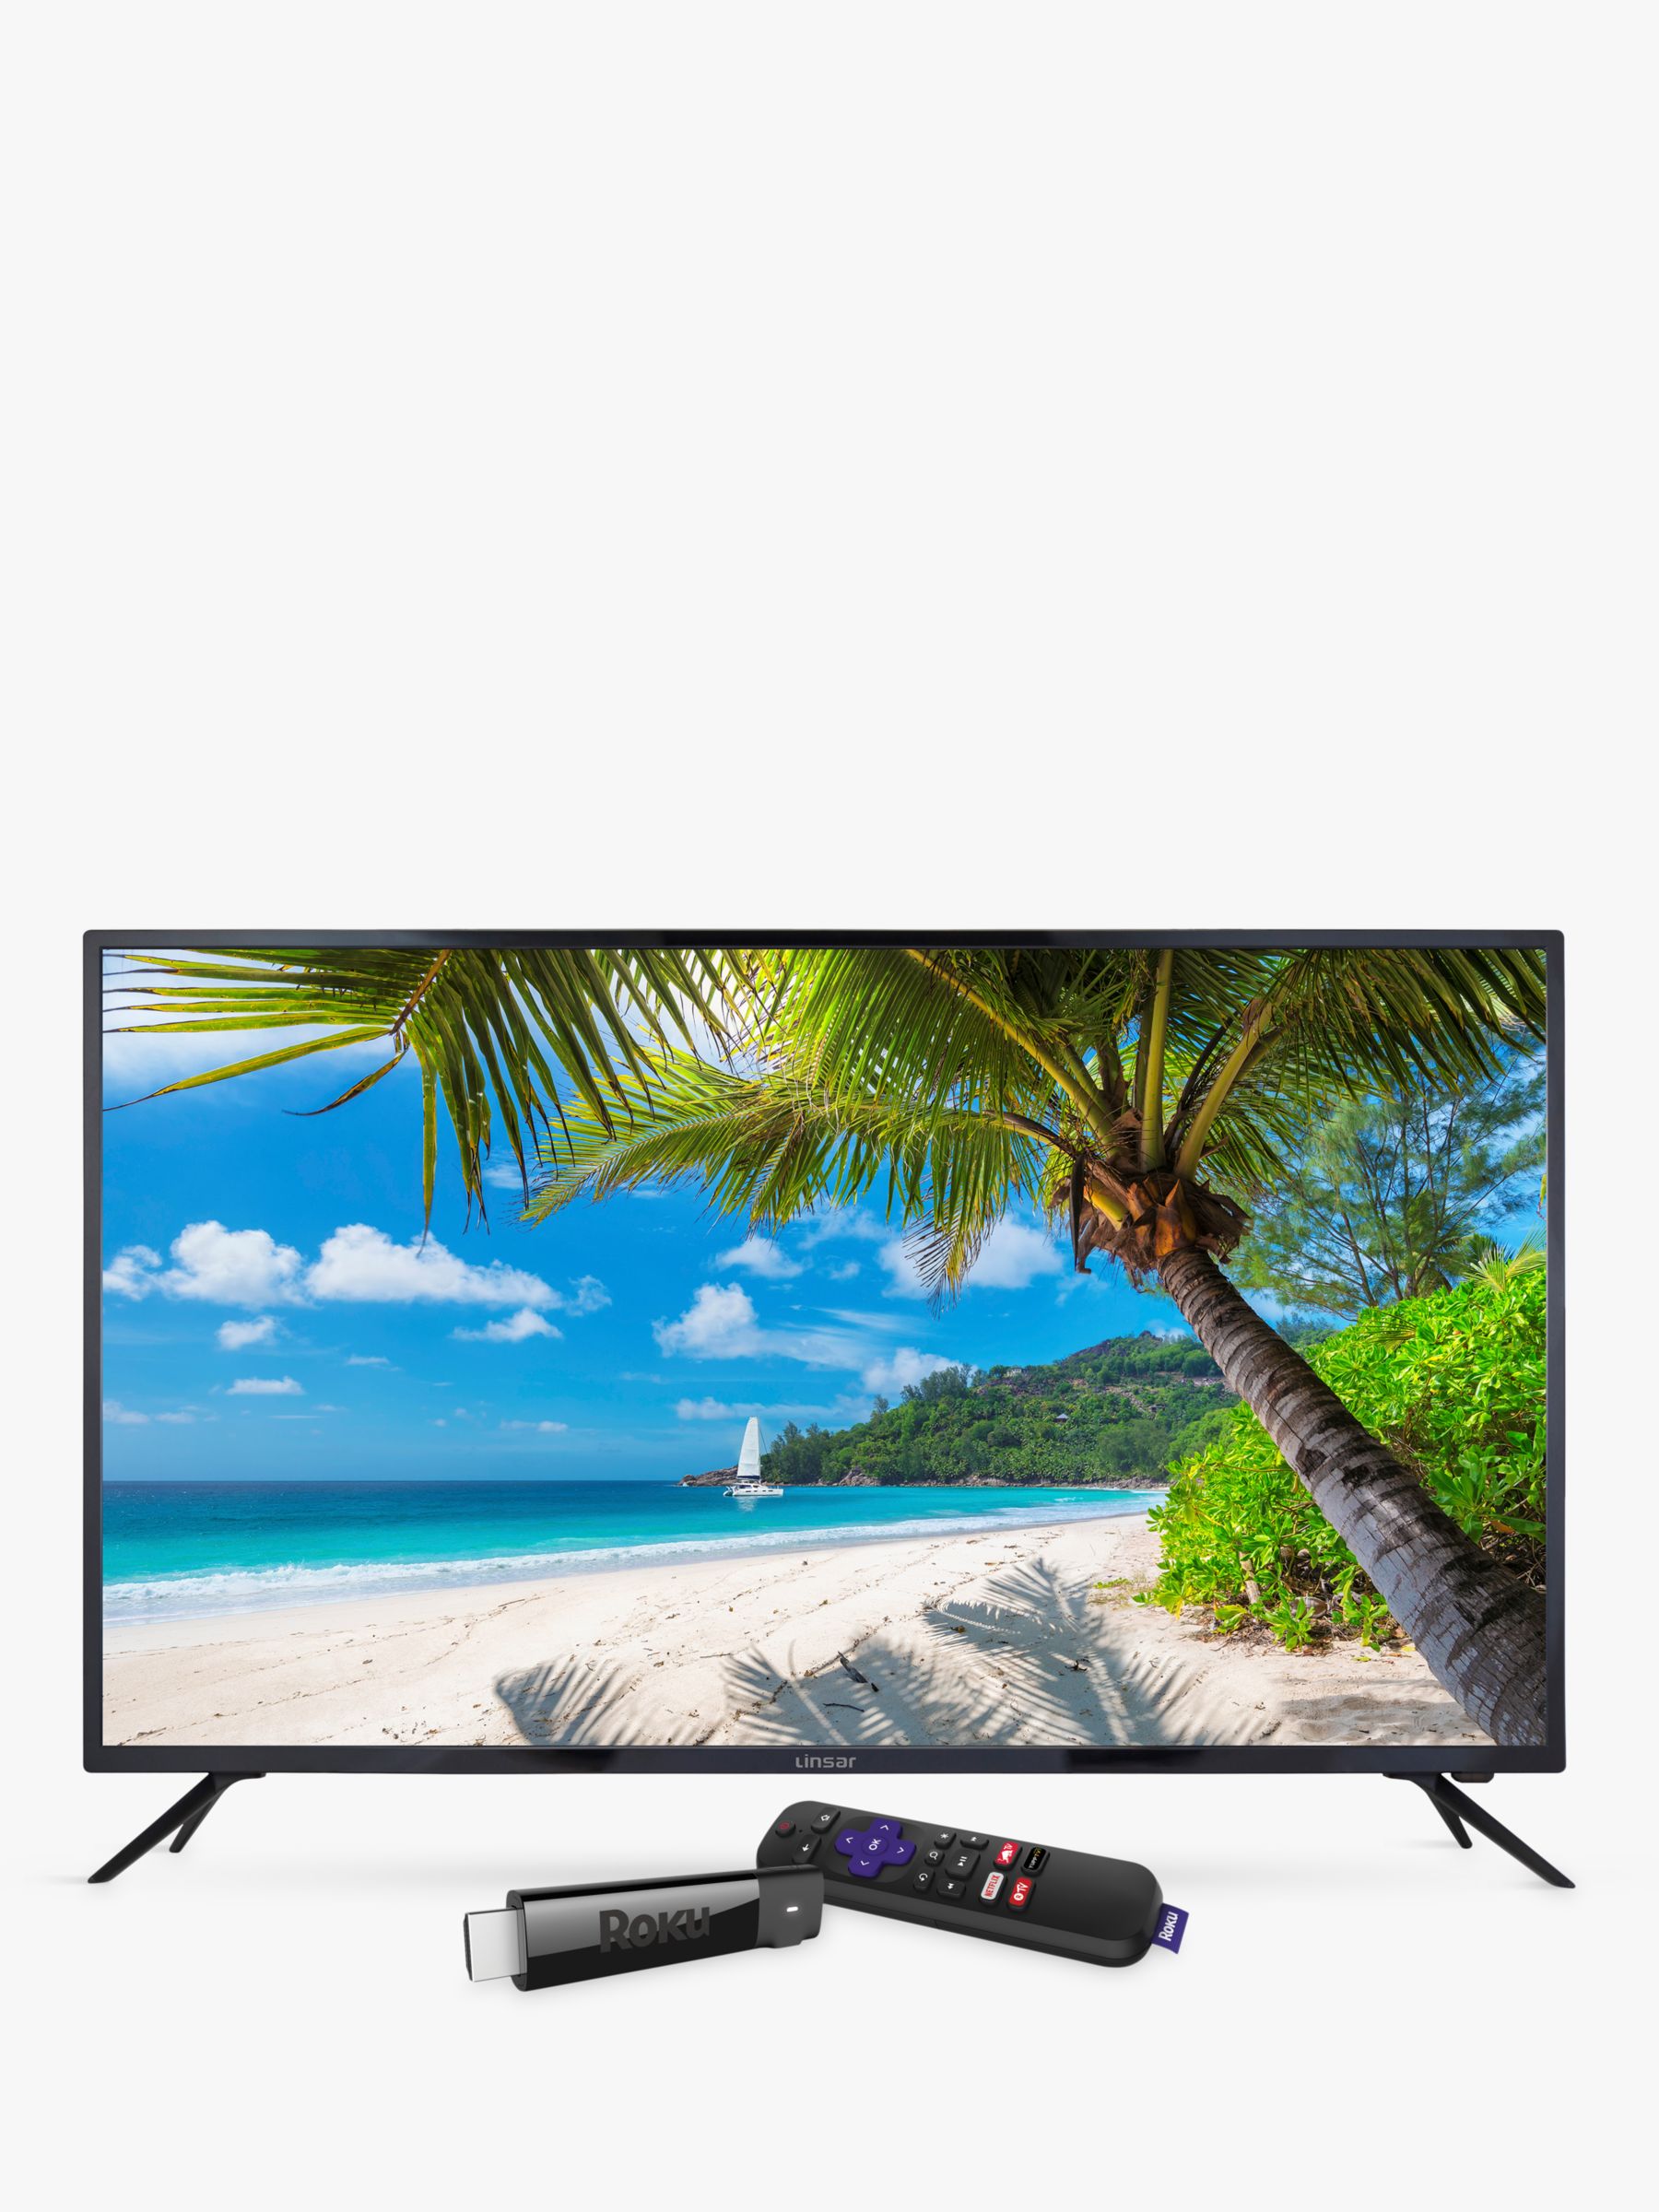 Linsar 55UHD520 LED 4K Ultra HD TV, 55 with Freeview HD & Roku Smart Streaming Stick, Black